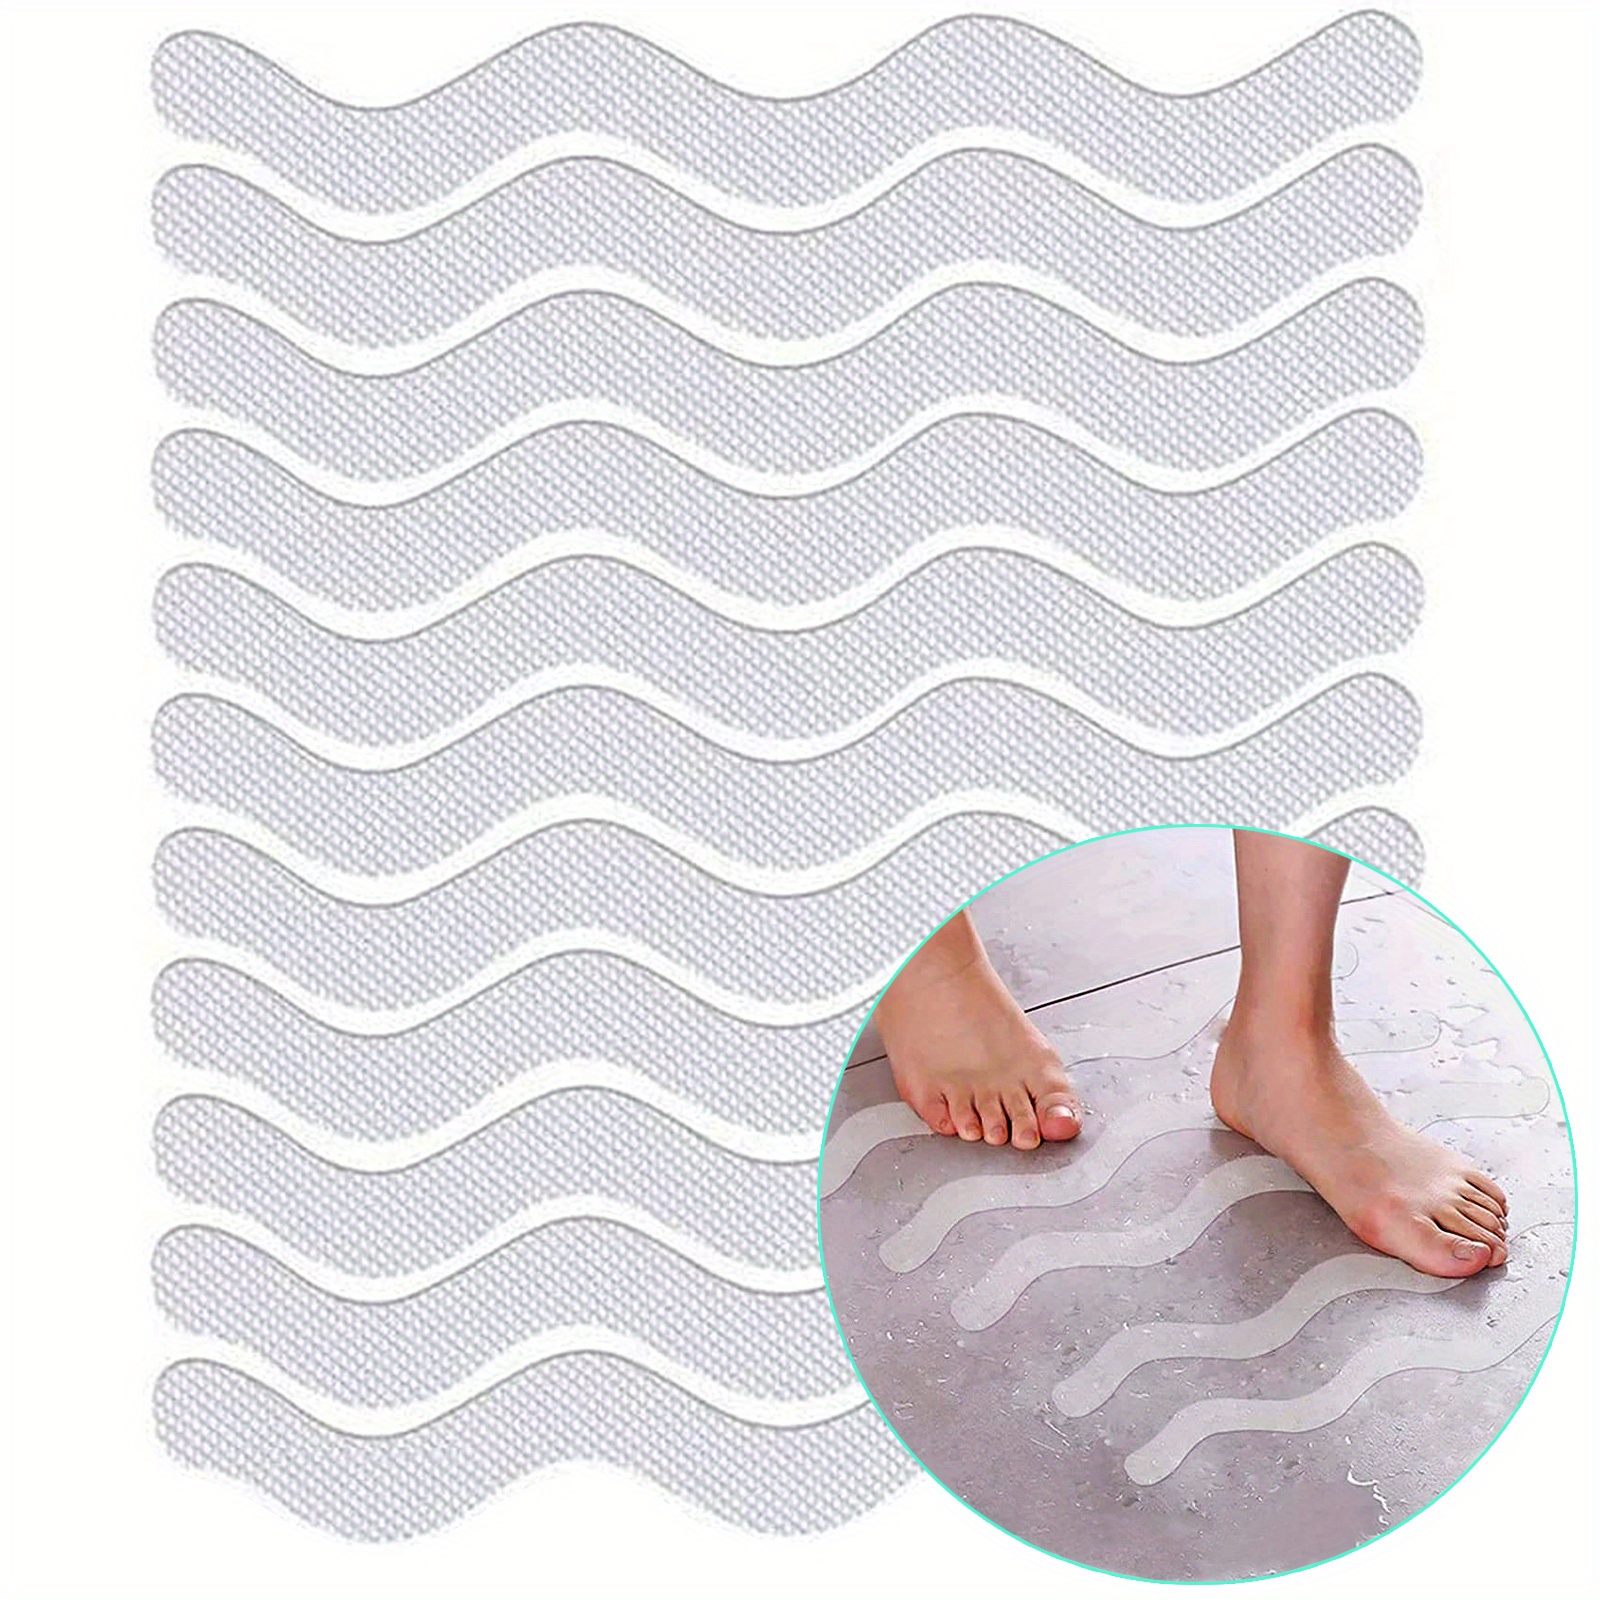 12PCs Bath Tub Shower Stickers Anti Slip Grip Strips Non-Slip